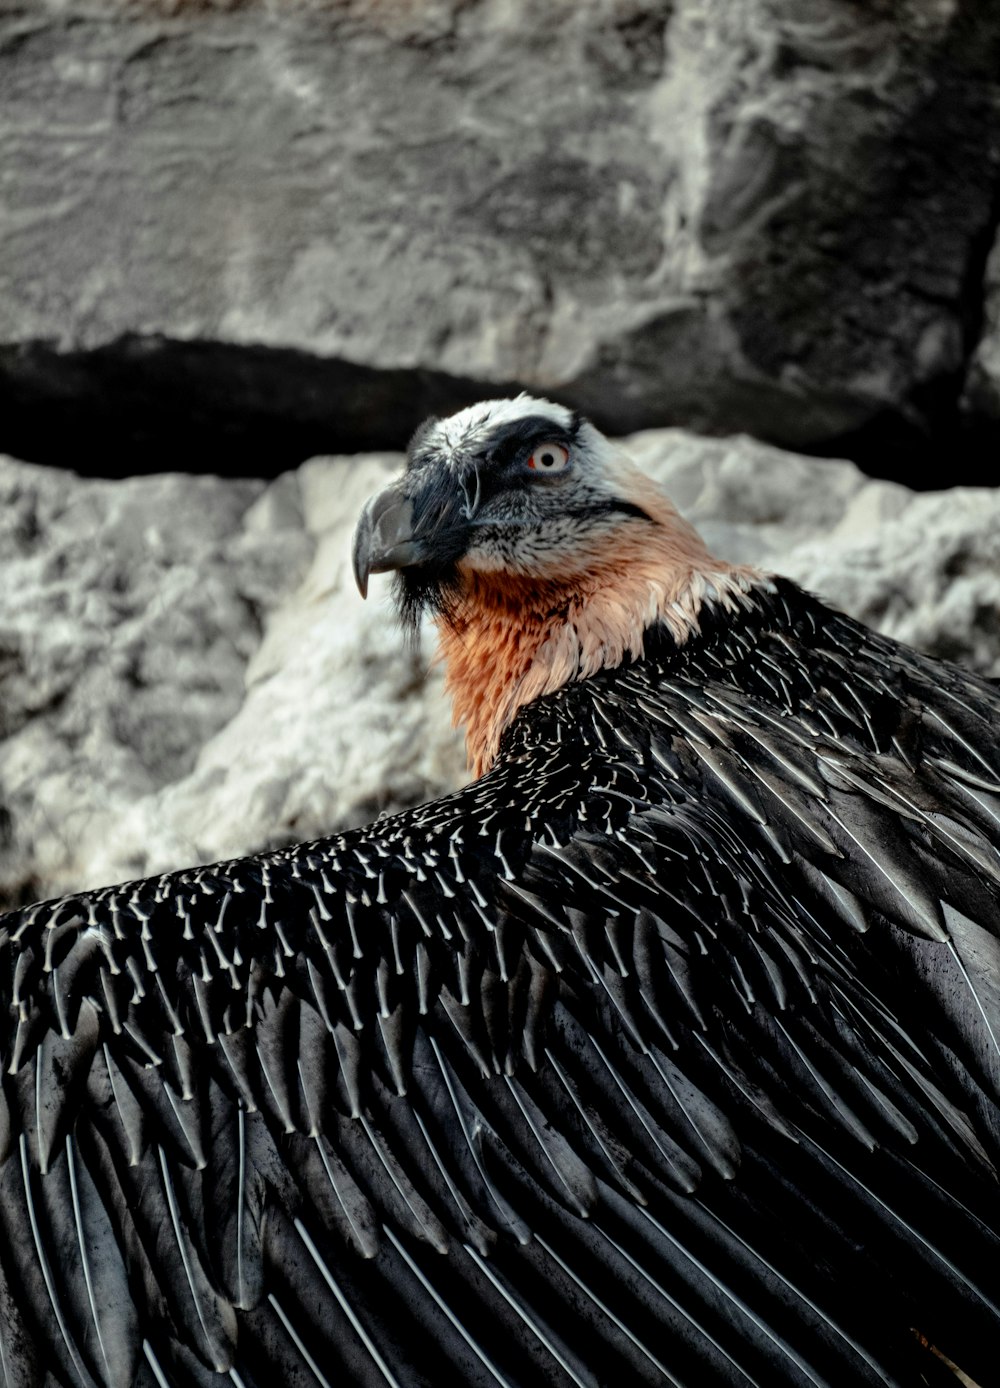 a close up of a large bird near a rock